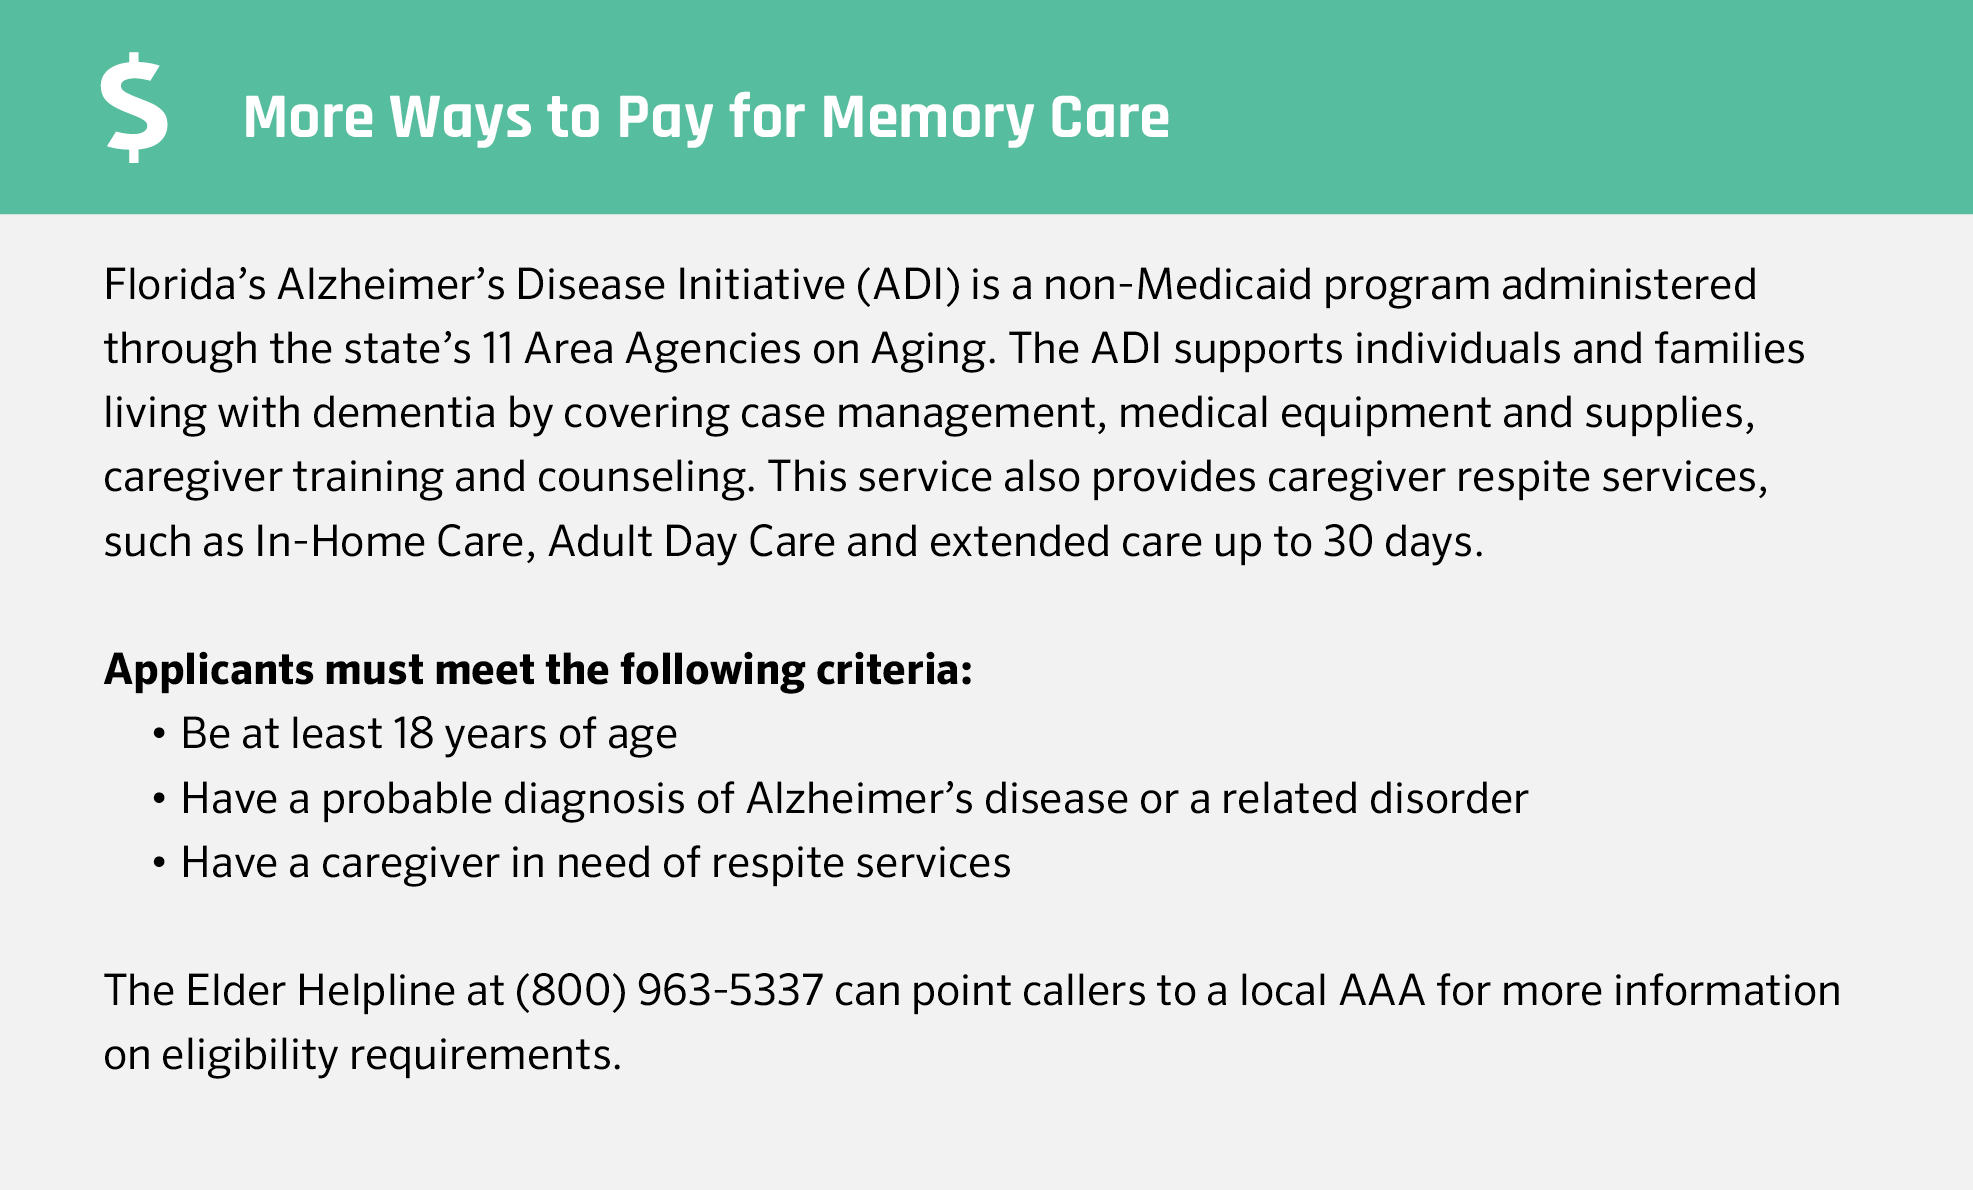 Memory Health  Memory Health